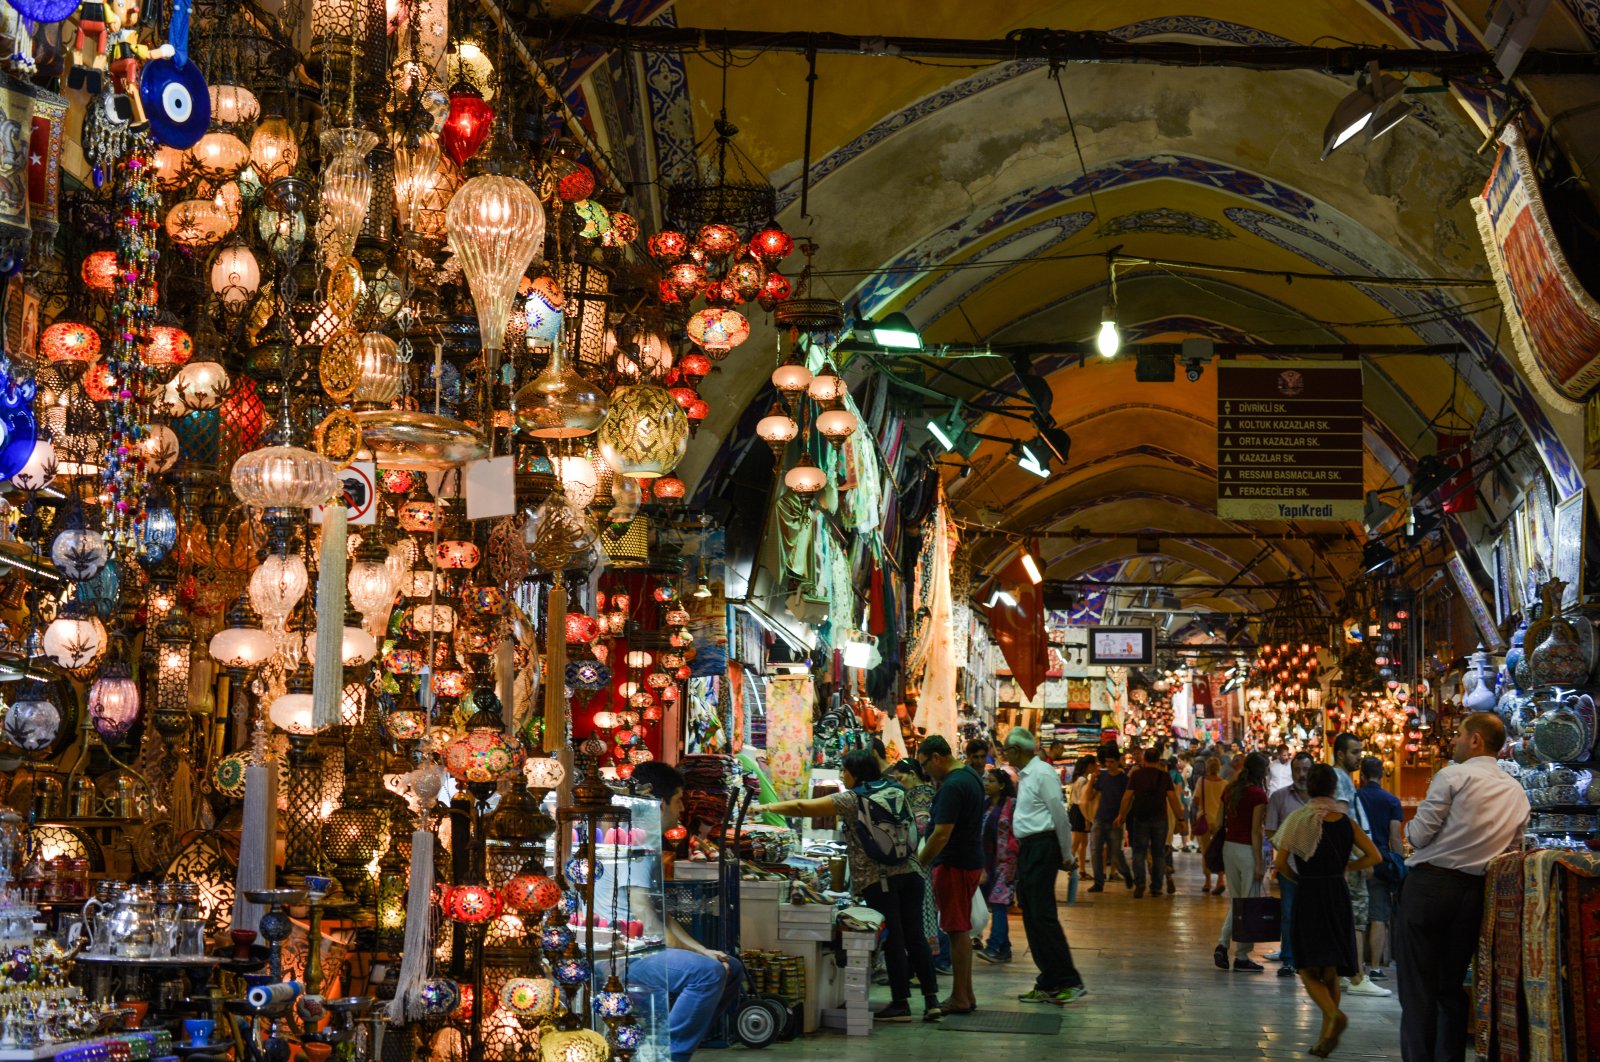 Mosaic Ottoman lamps in the Grand Bazaar in Istanbul, Turkey. (Shutterstock Photo)